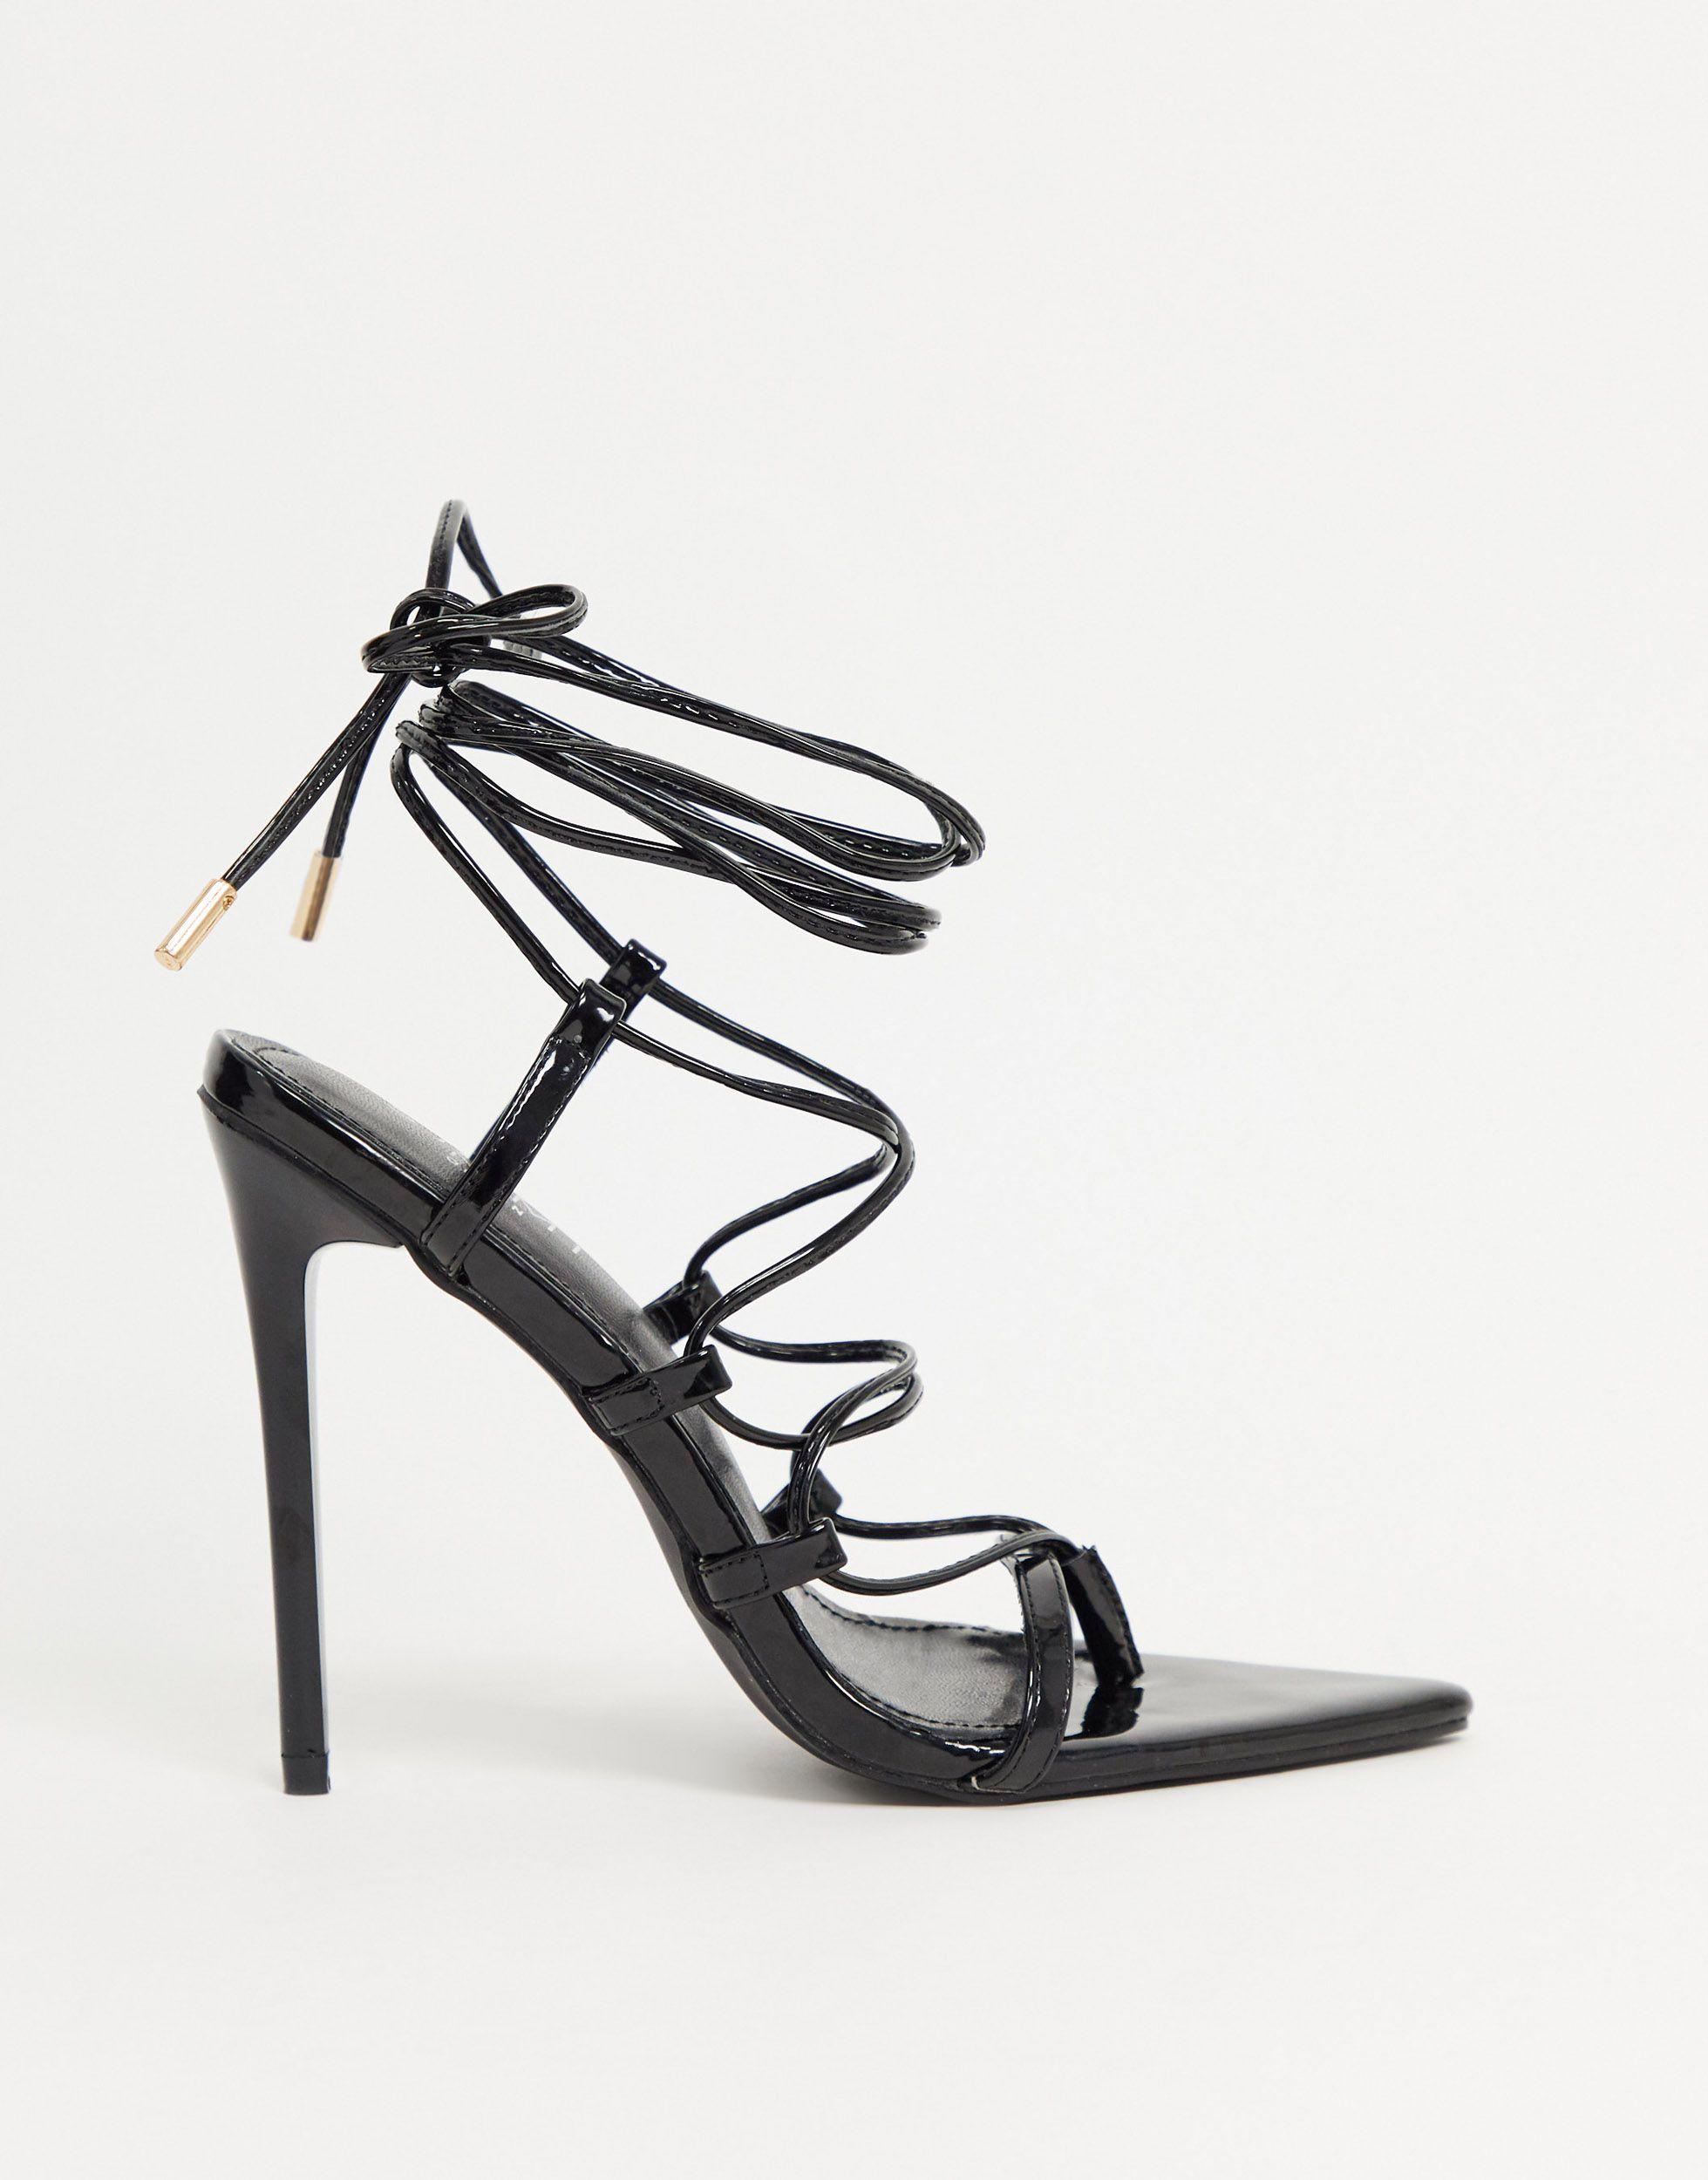 Buy > simmi london high heels > in stock